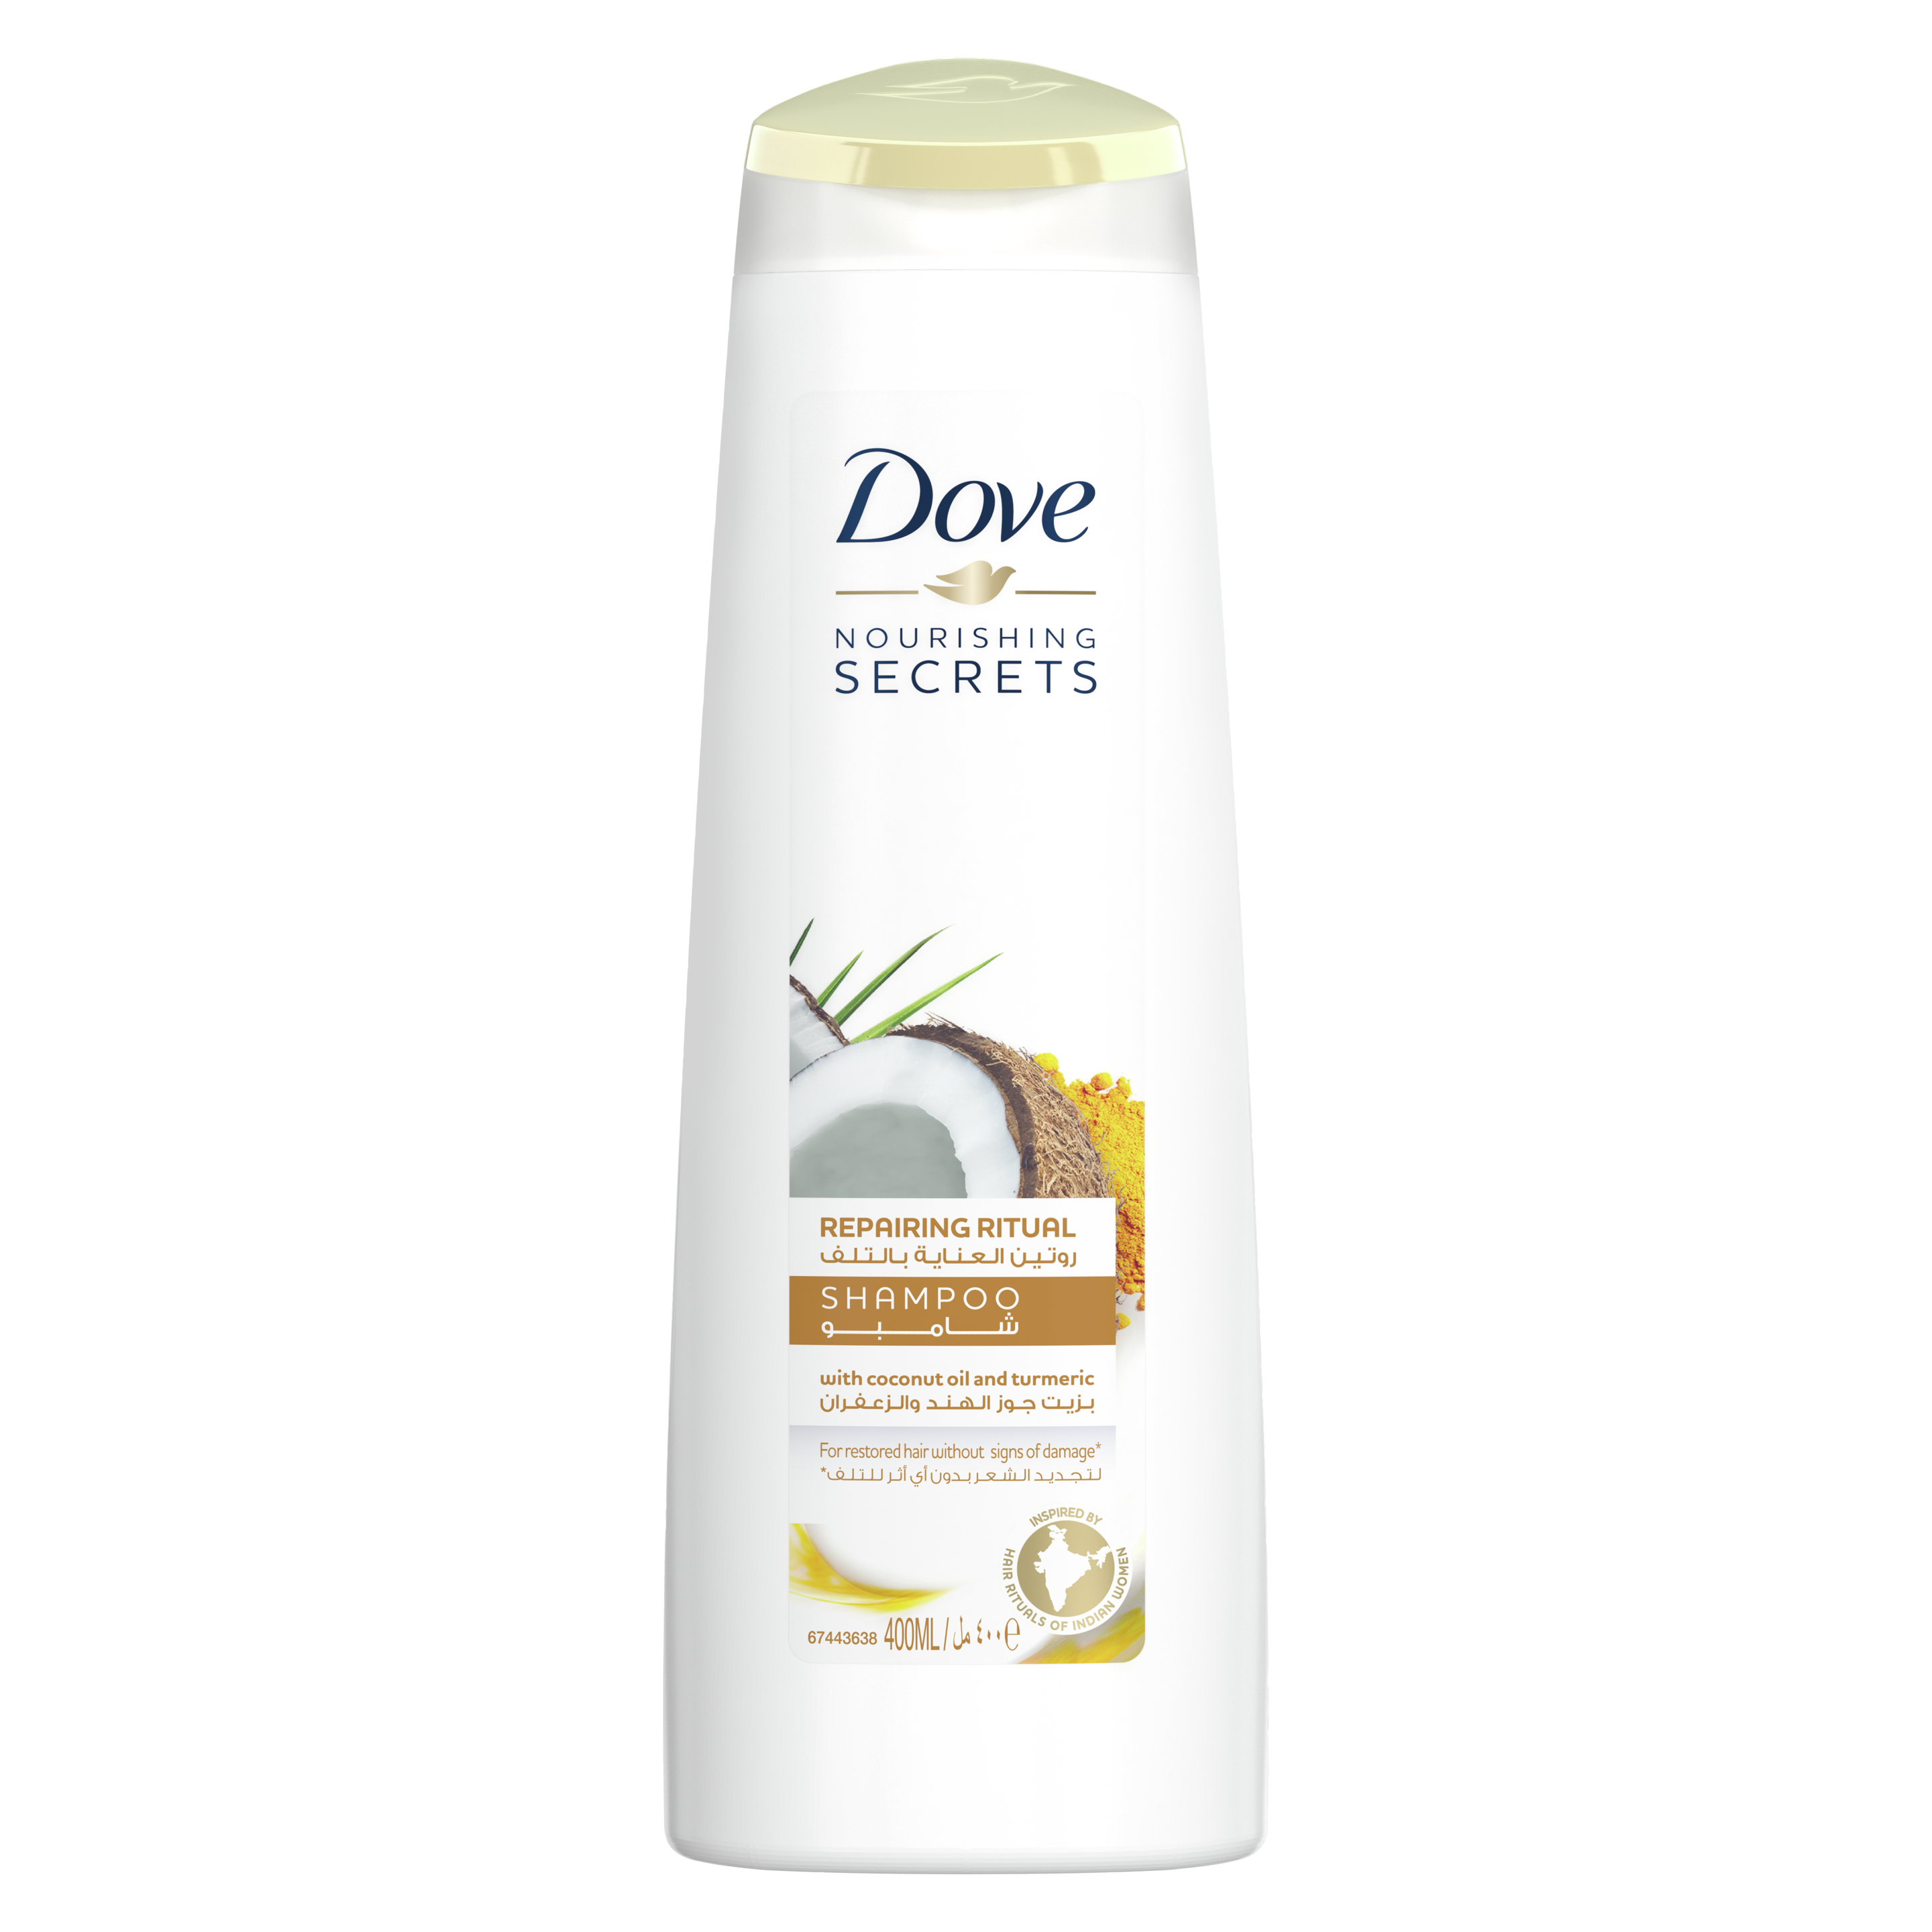 Dove Nourishing Secrets Repairing Ritual Shampoo- Coconut Oil and Turmeric 400ml